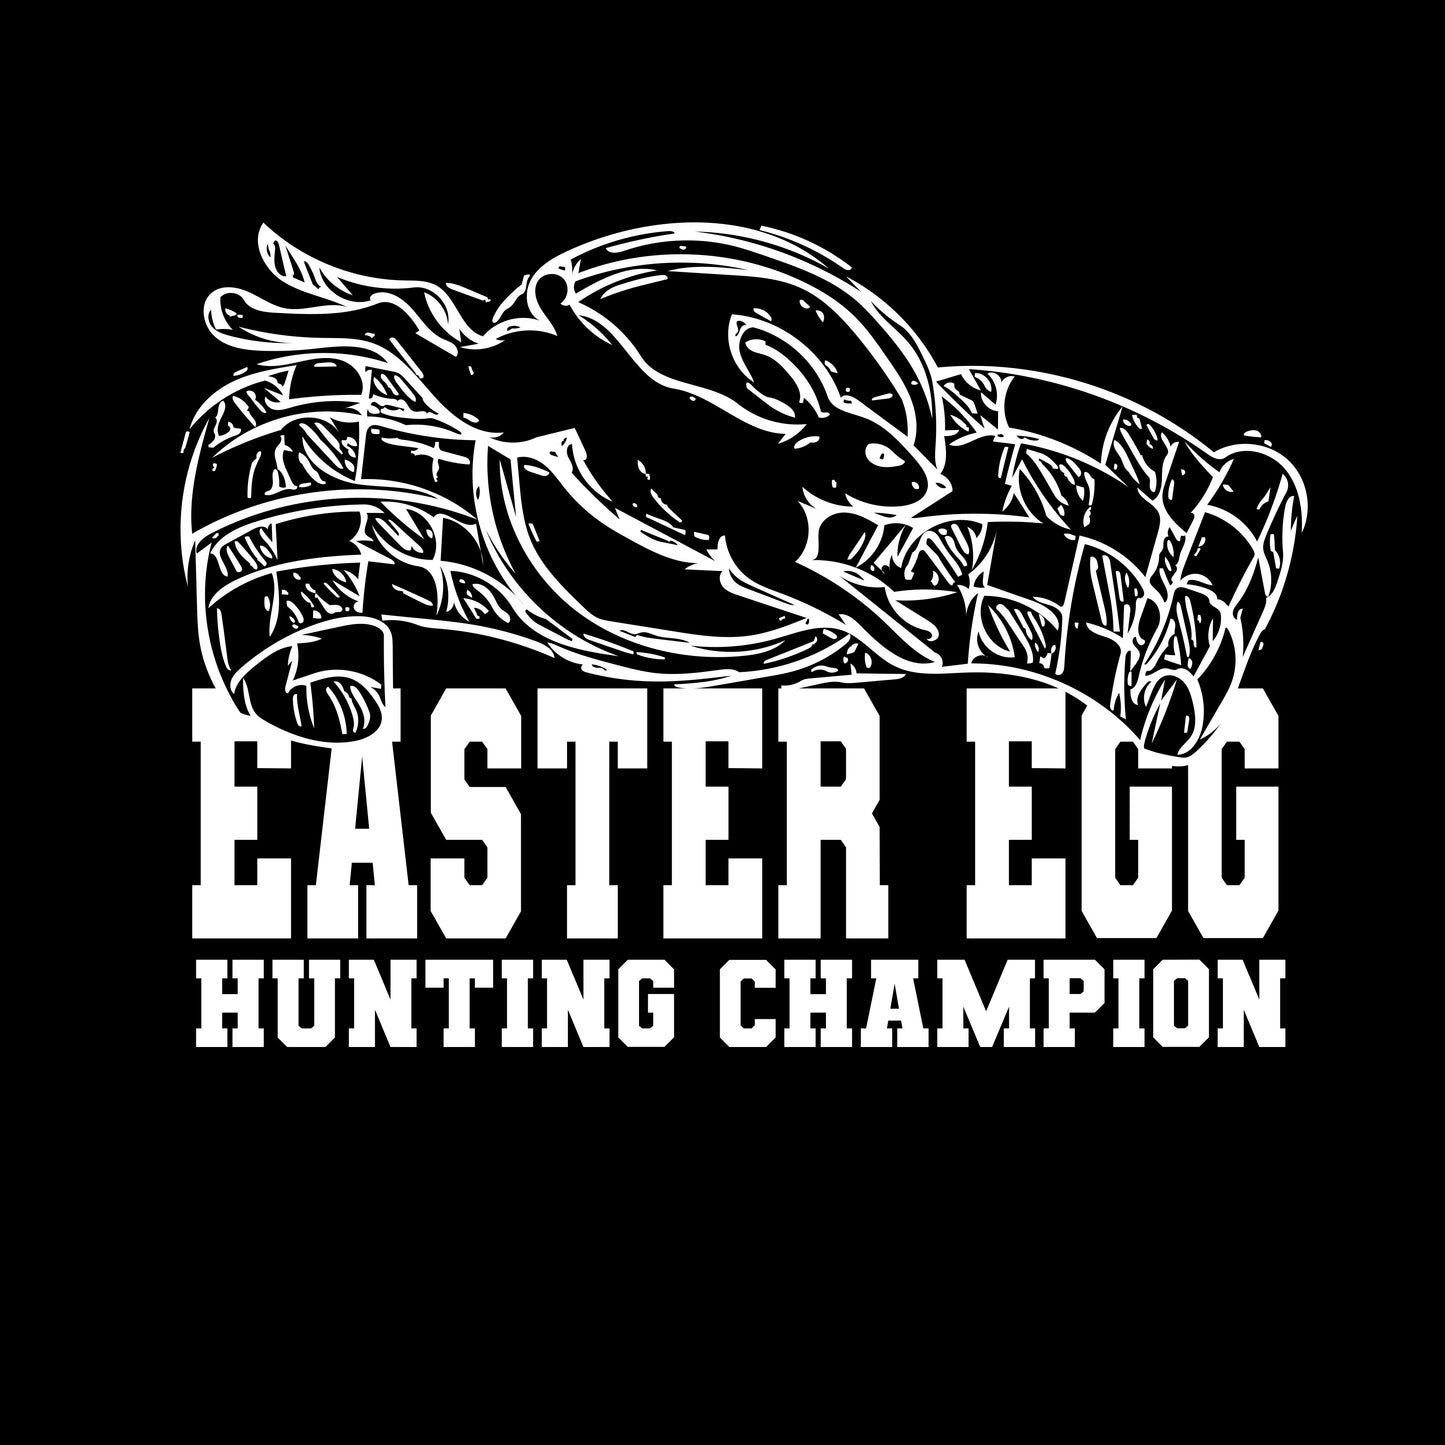 Easter Egg Hunting Champion